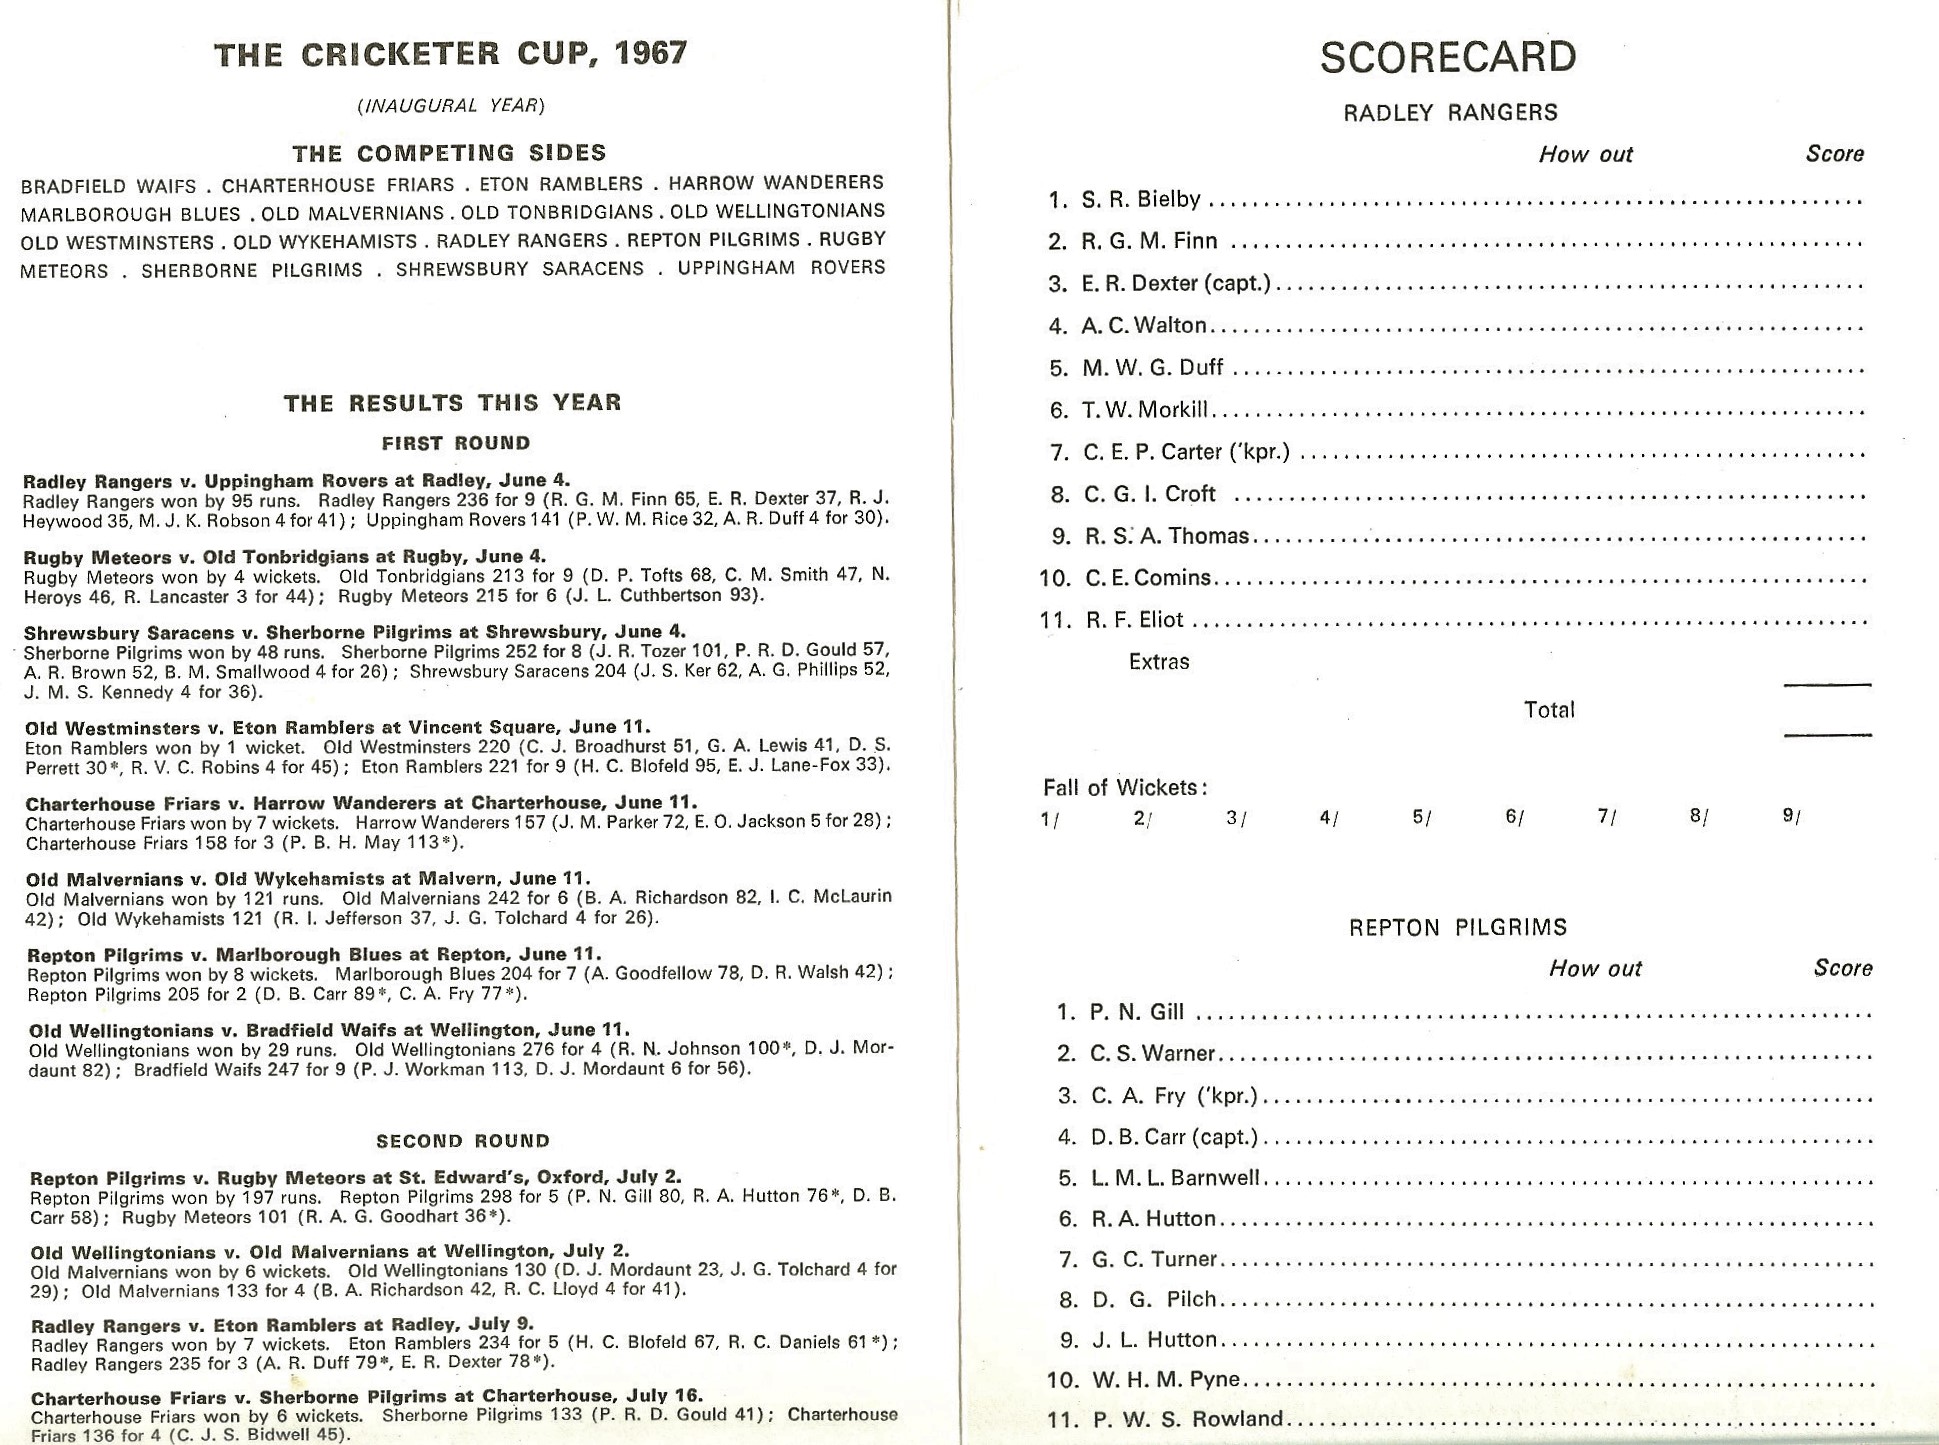 CRICKET - 1967 RADLEY RANGERS V REPTON PILGRIMS SCORECARD @ BURTON COURT CHELSEA - Image 2 of 2